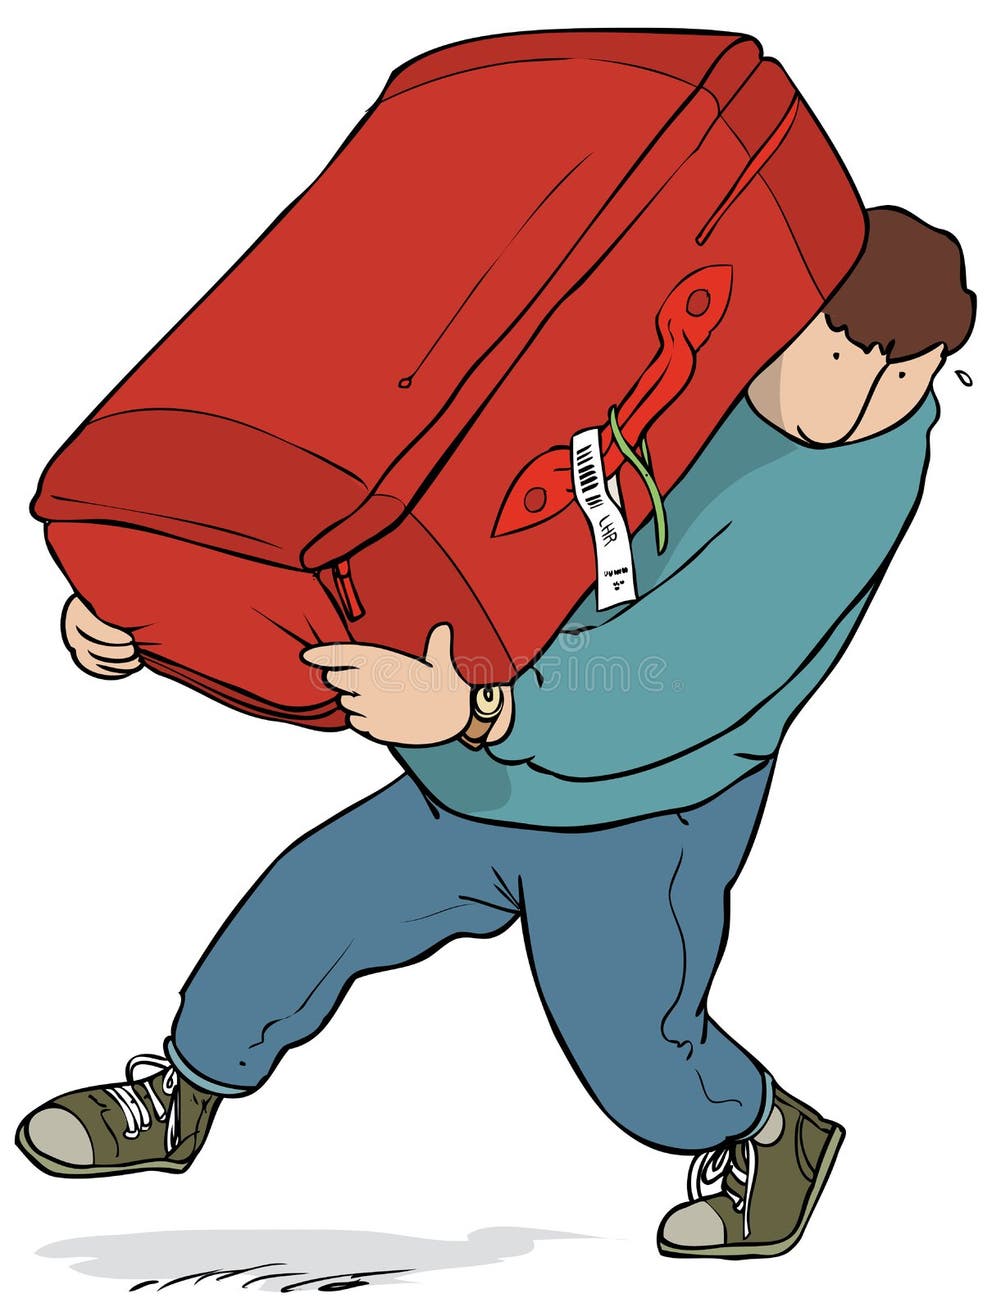 Heavy picture. Тяжелая ноша иллюстрация. Человек несет чемодан. Человек несет тяжелый чемодан. Тащить чемодан.